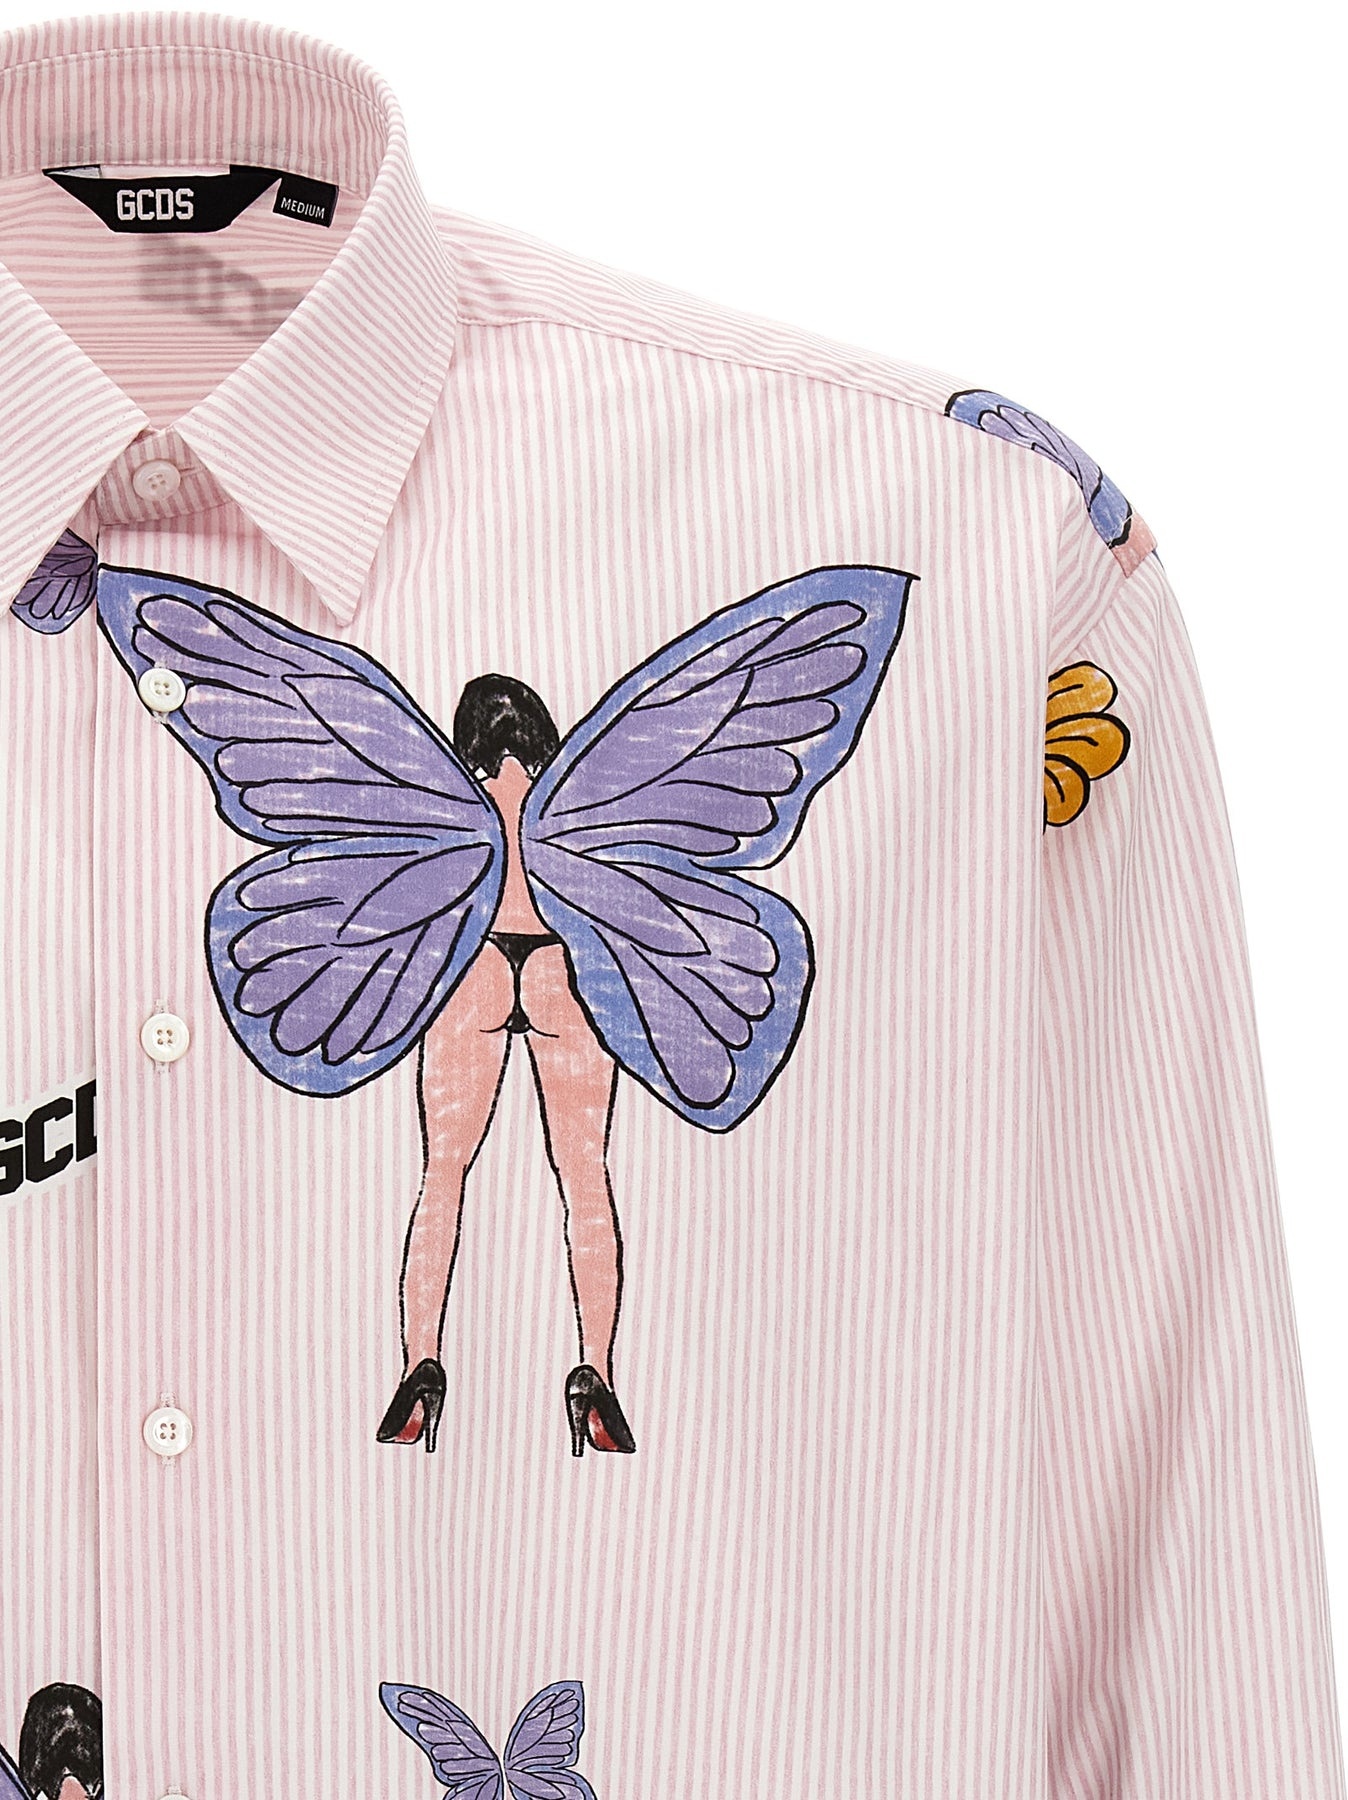 Butterfly Shirt, Blouse Pink - 3